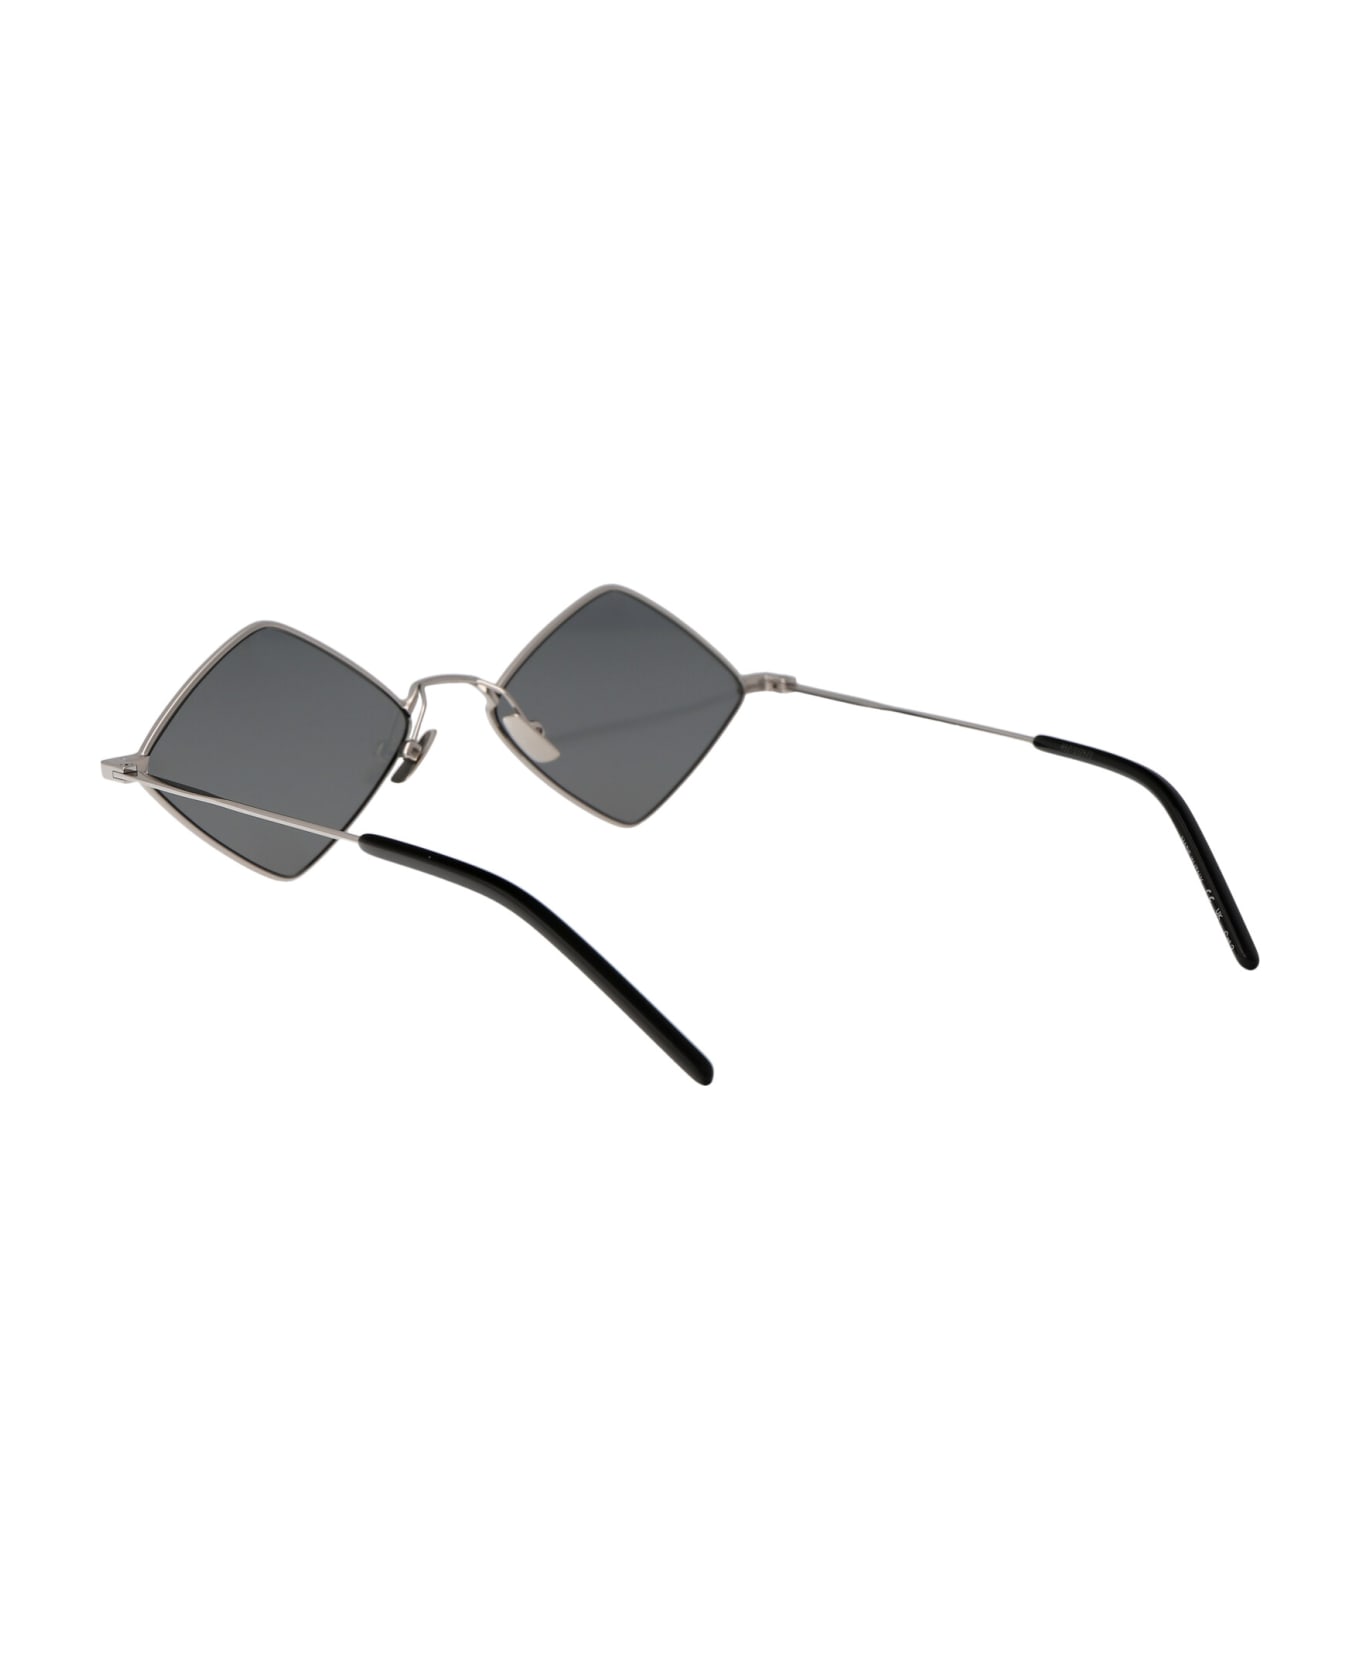 Saint Laurent Eyewear Sl 302 Lisa Sunglasses - 010 SILVER SILVER SILVER サングラス